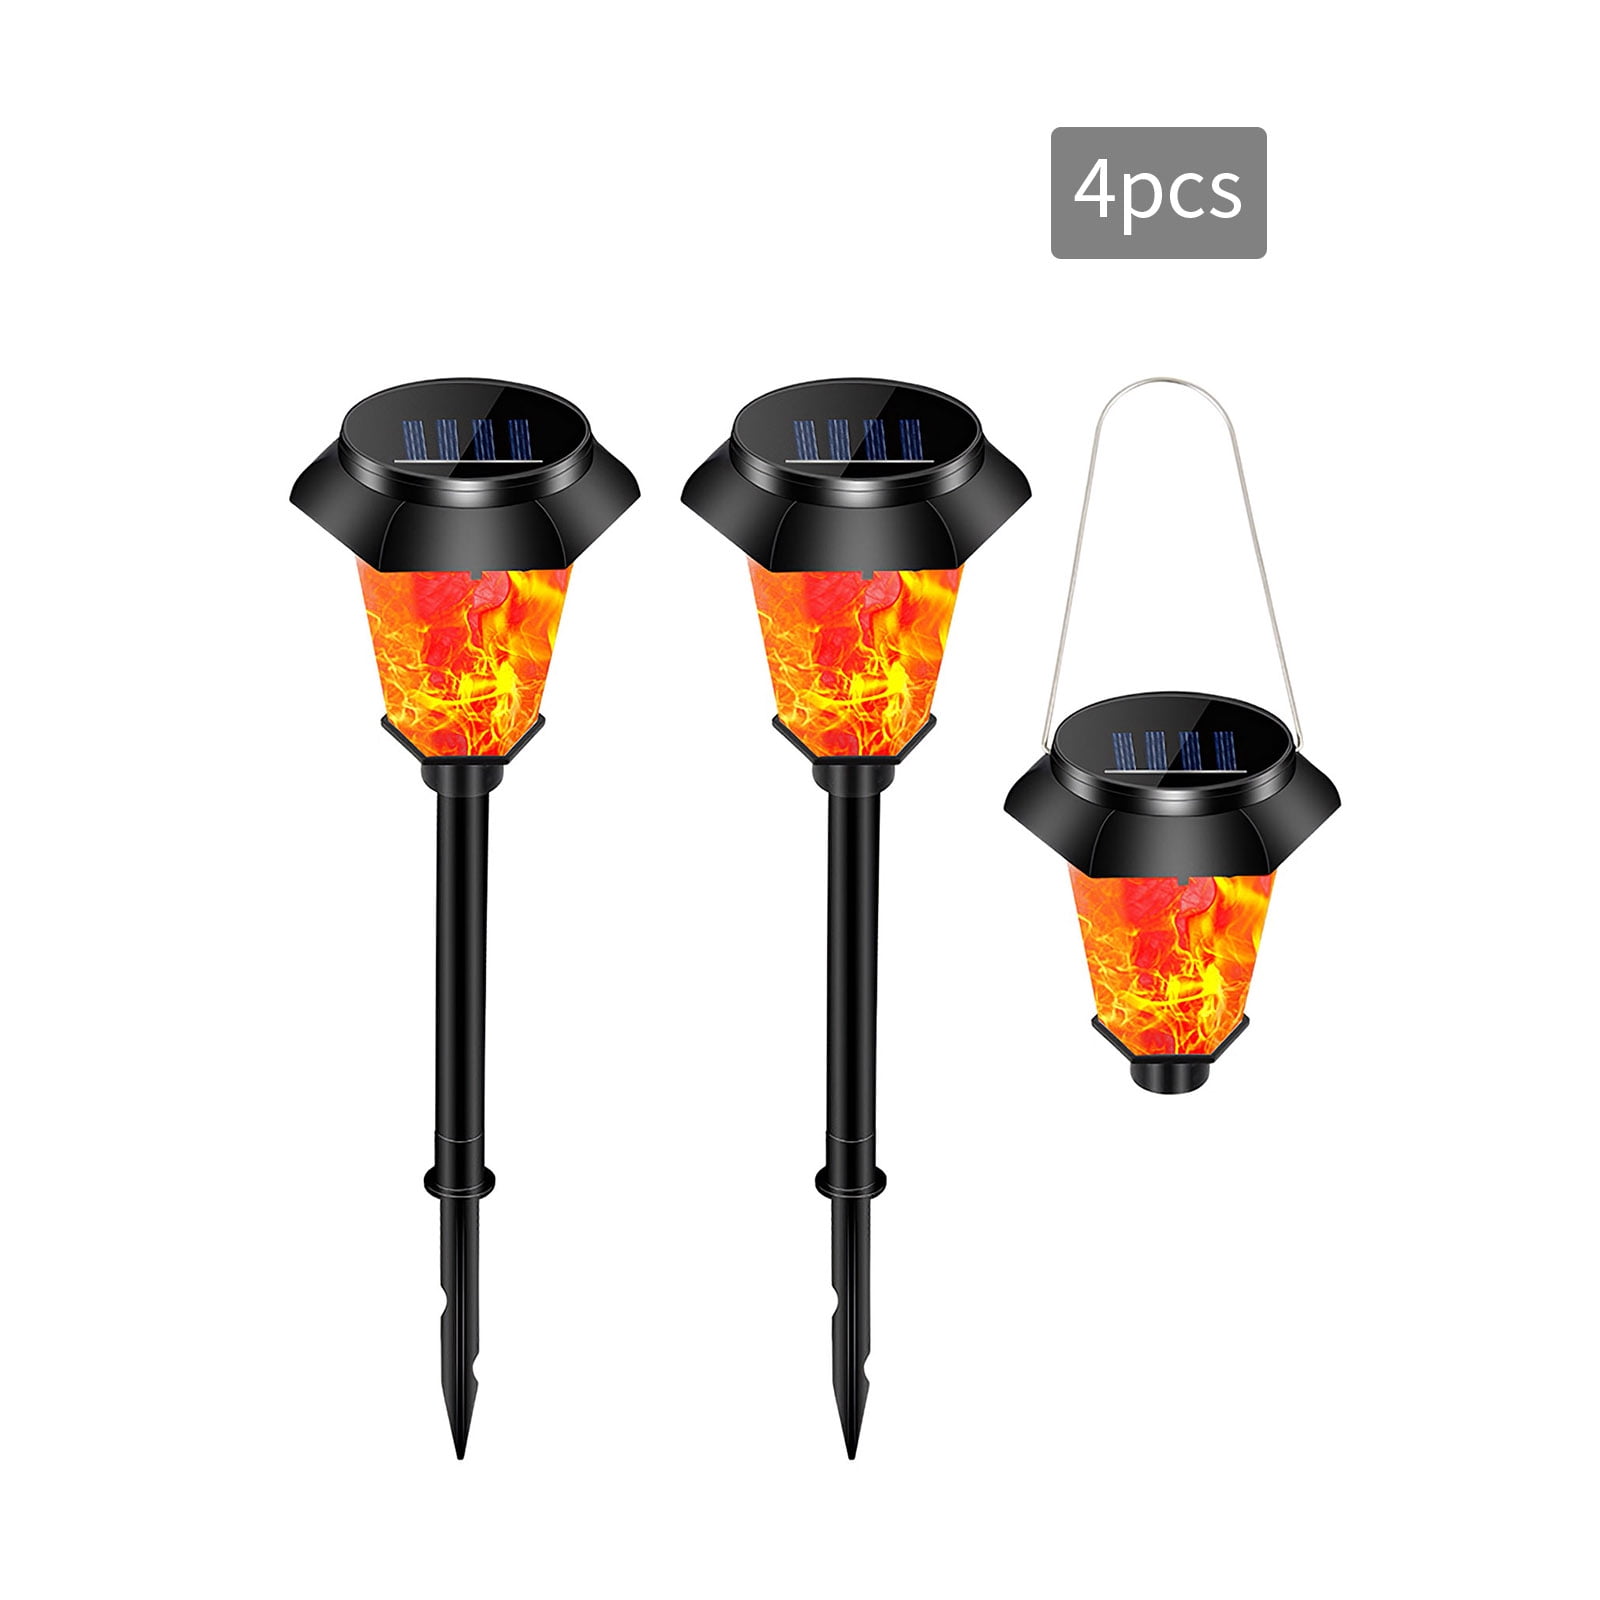 4PCS 12 LED Outdoor Solar Torch Flickering Flame Light Garden Waterproof Lamps 